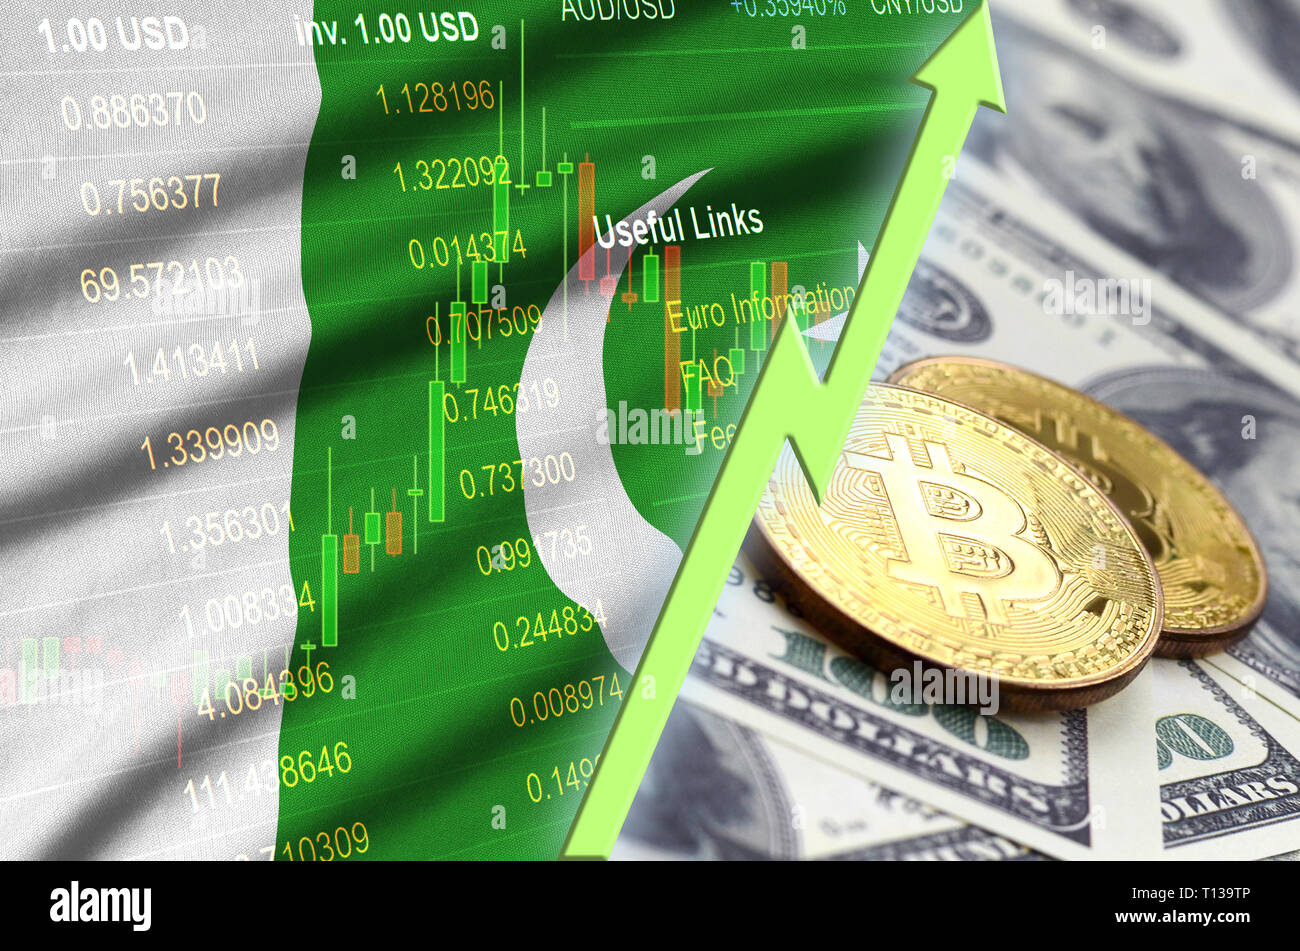 Bitcoin price in pakistan